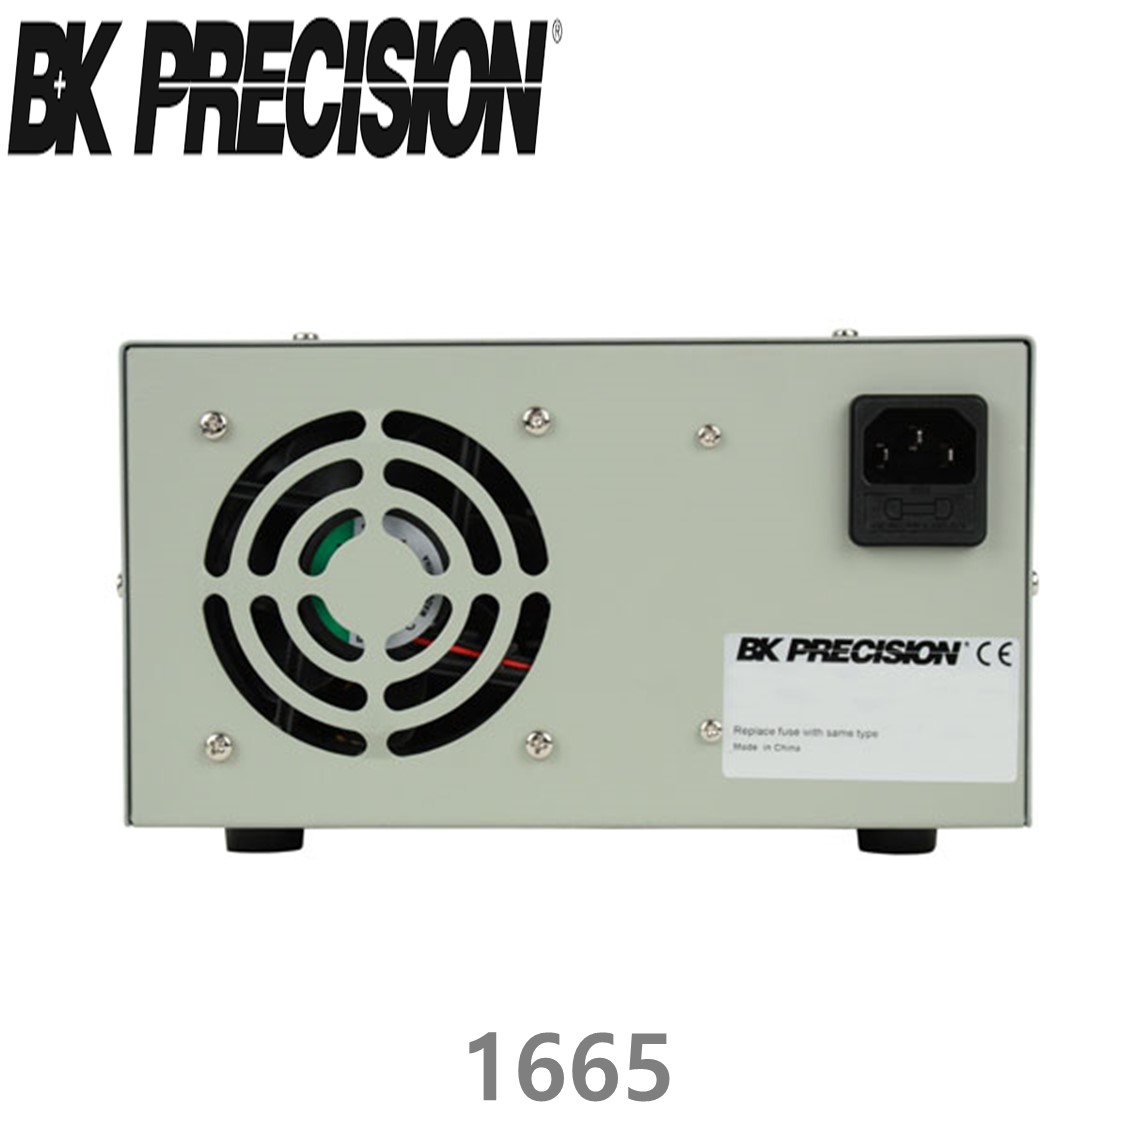 [ BK PRECISION ] BK 1665, 20V/10A, Switching DC Power Supply, DC 전원공급기, B&K 1665